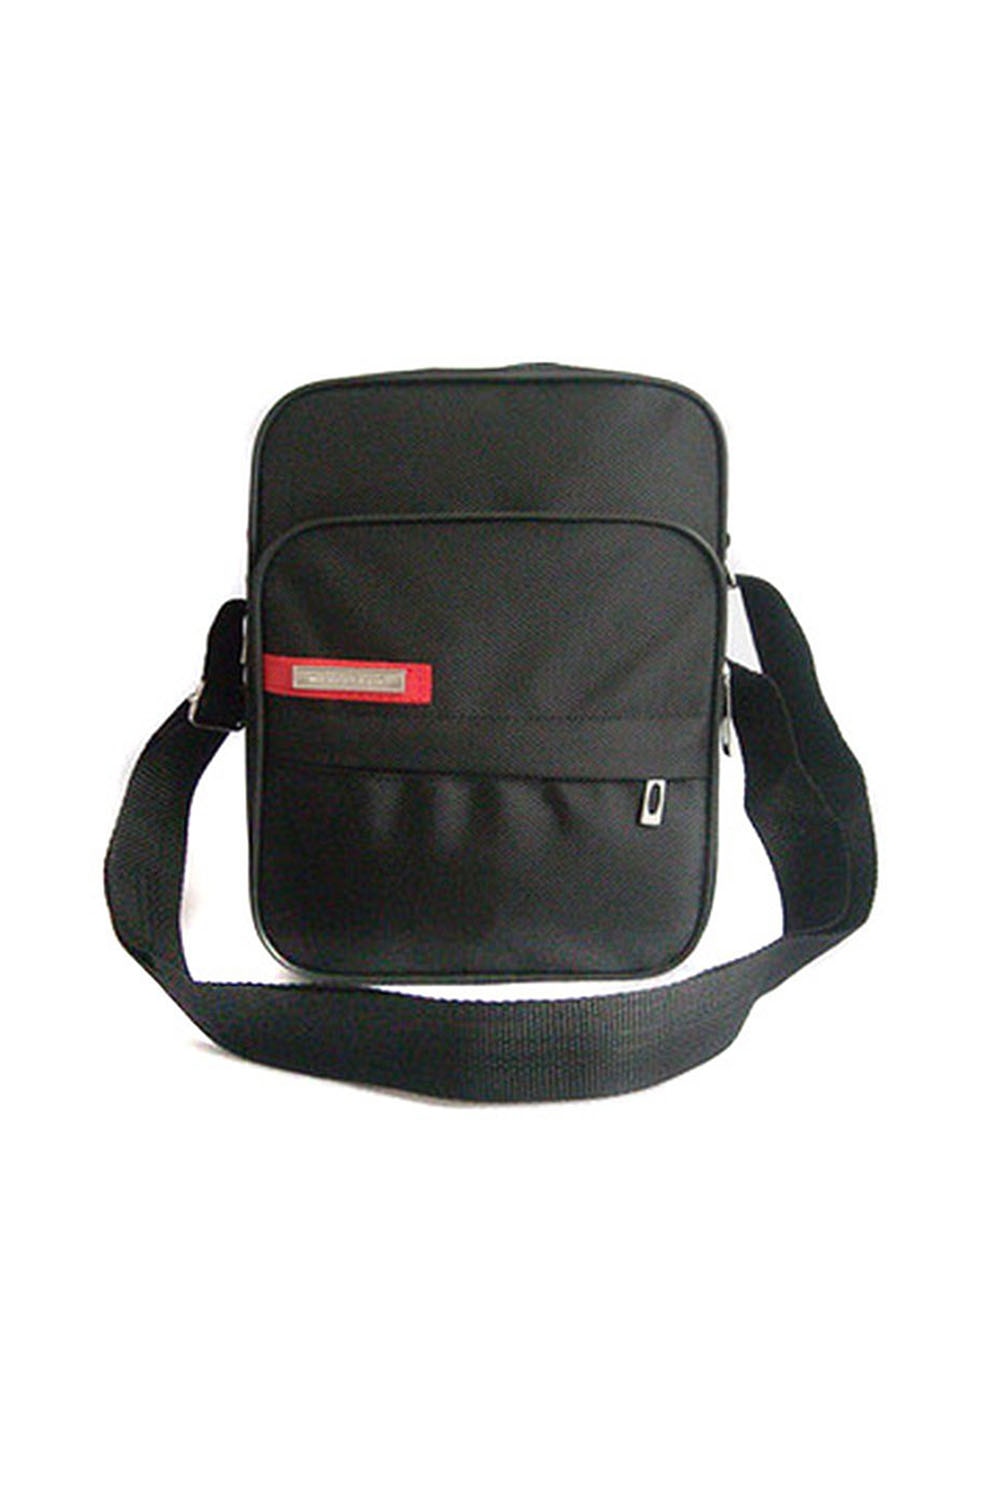 Brand Small Men Bag Waterproof Oxford Messenger Bag Business Casual Briefcase Crossbody bag male shoulder bag - ebowsos